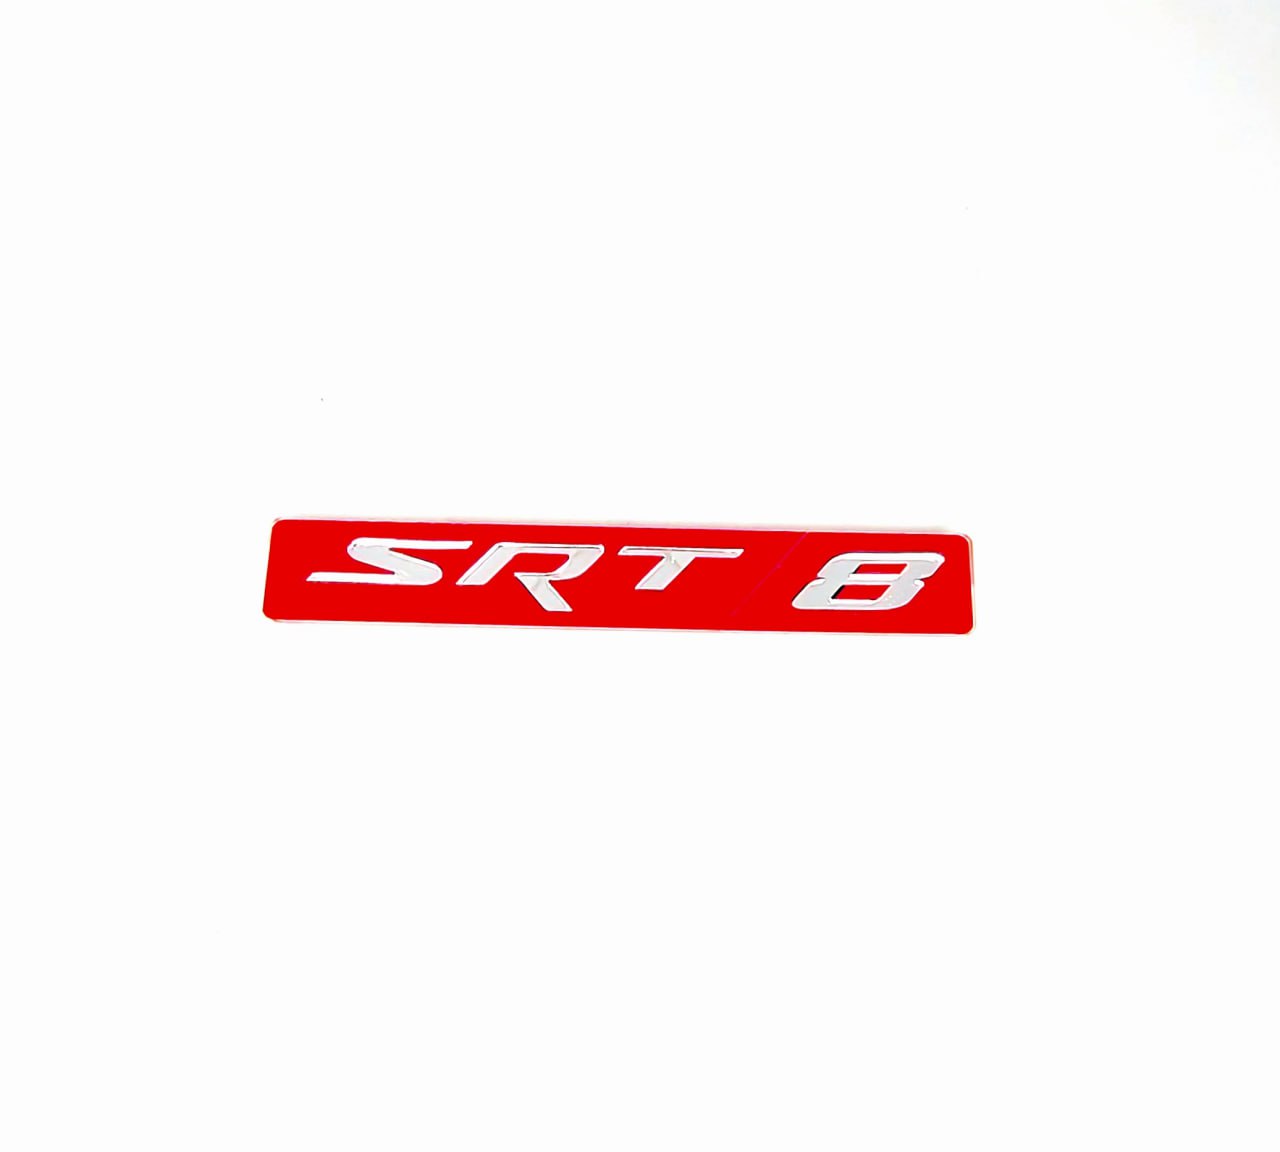 Dodge tailgate trunk rear emblem with SRT8 logo (Type 3)